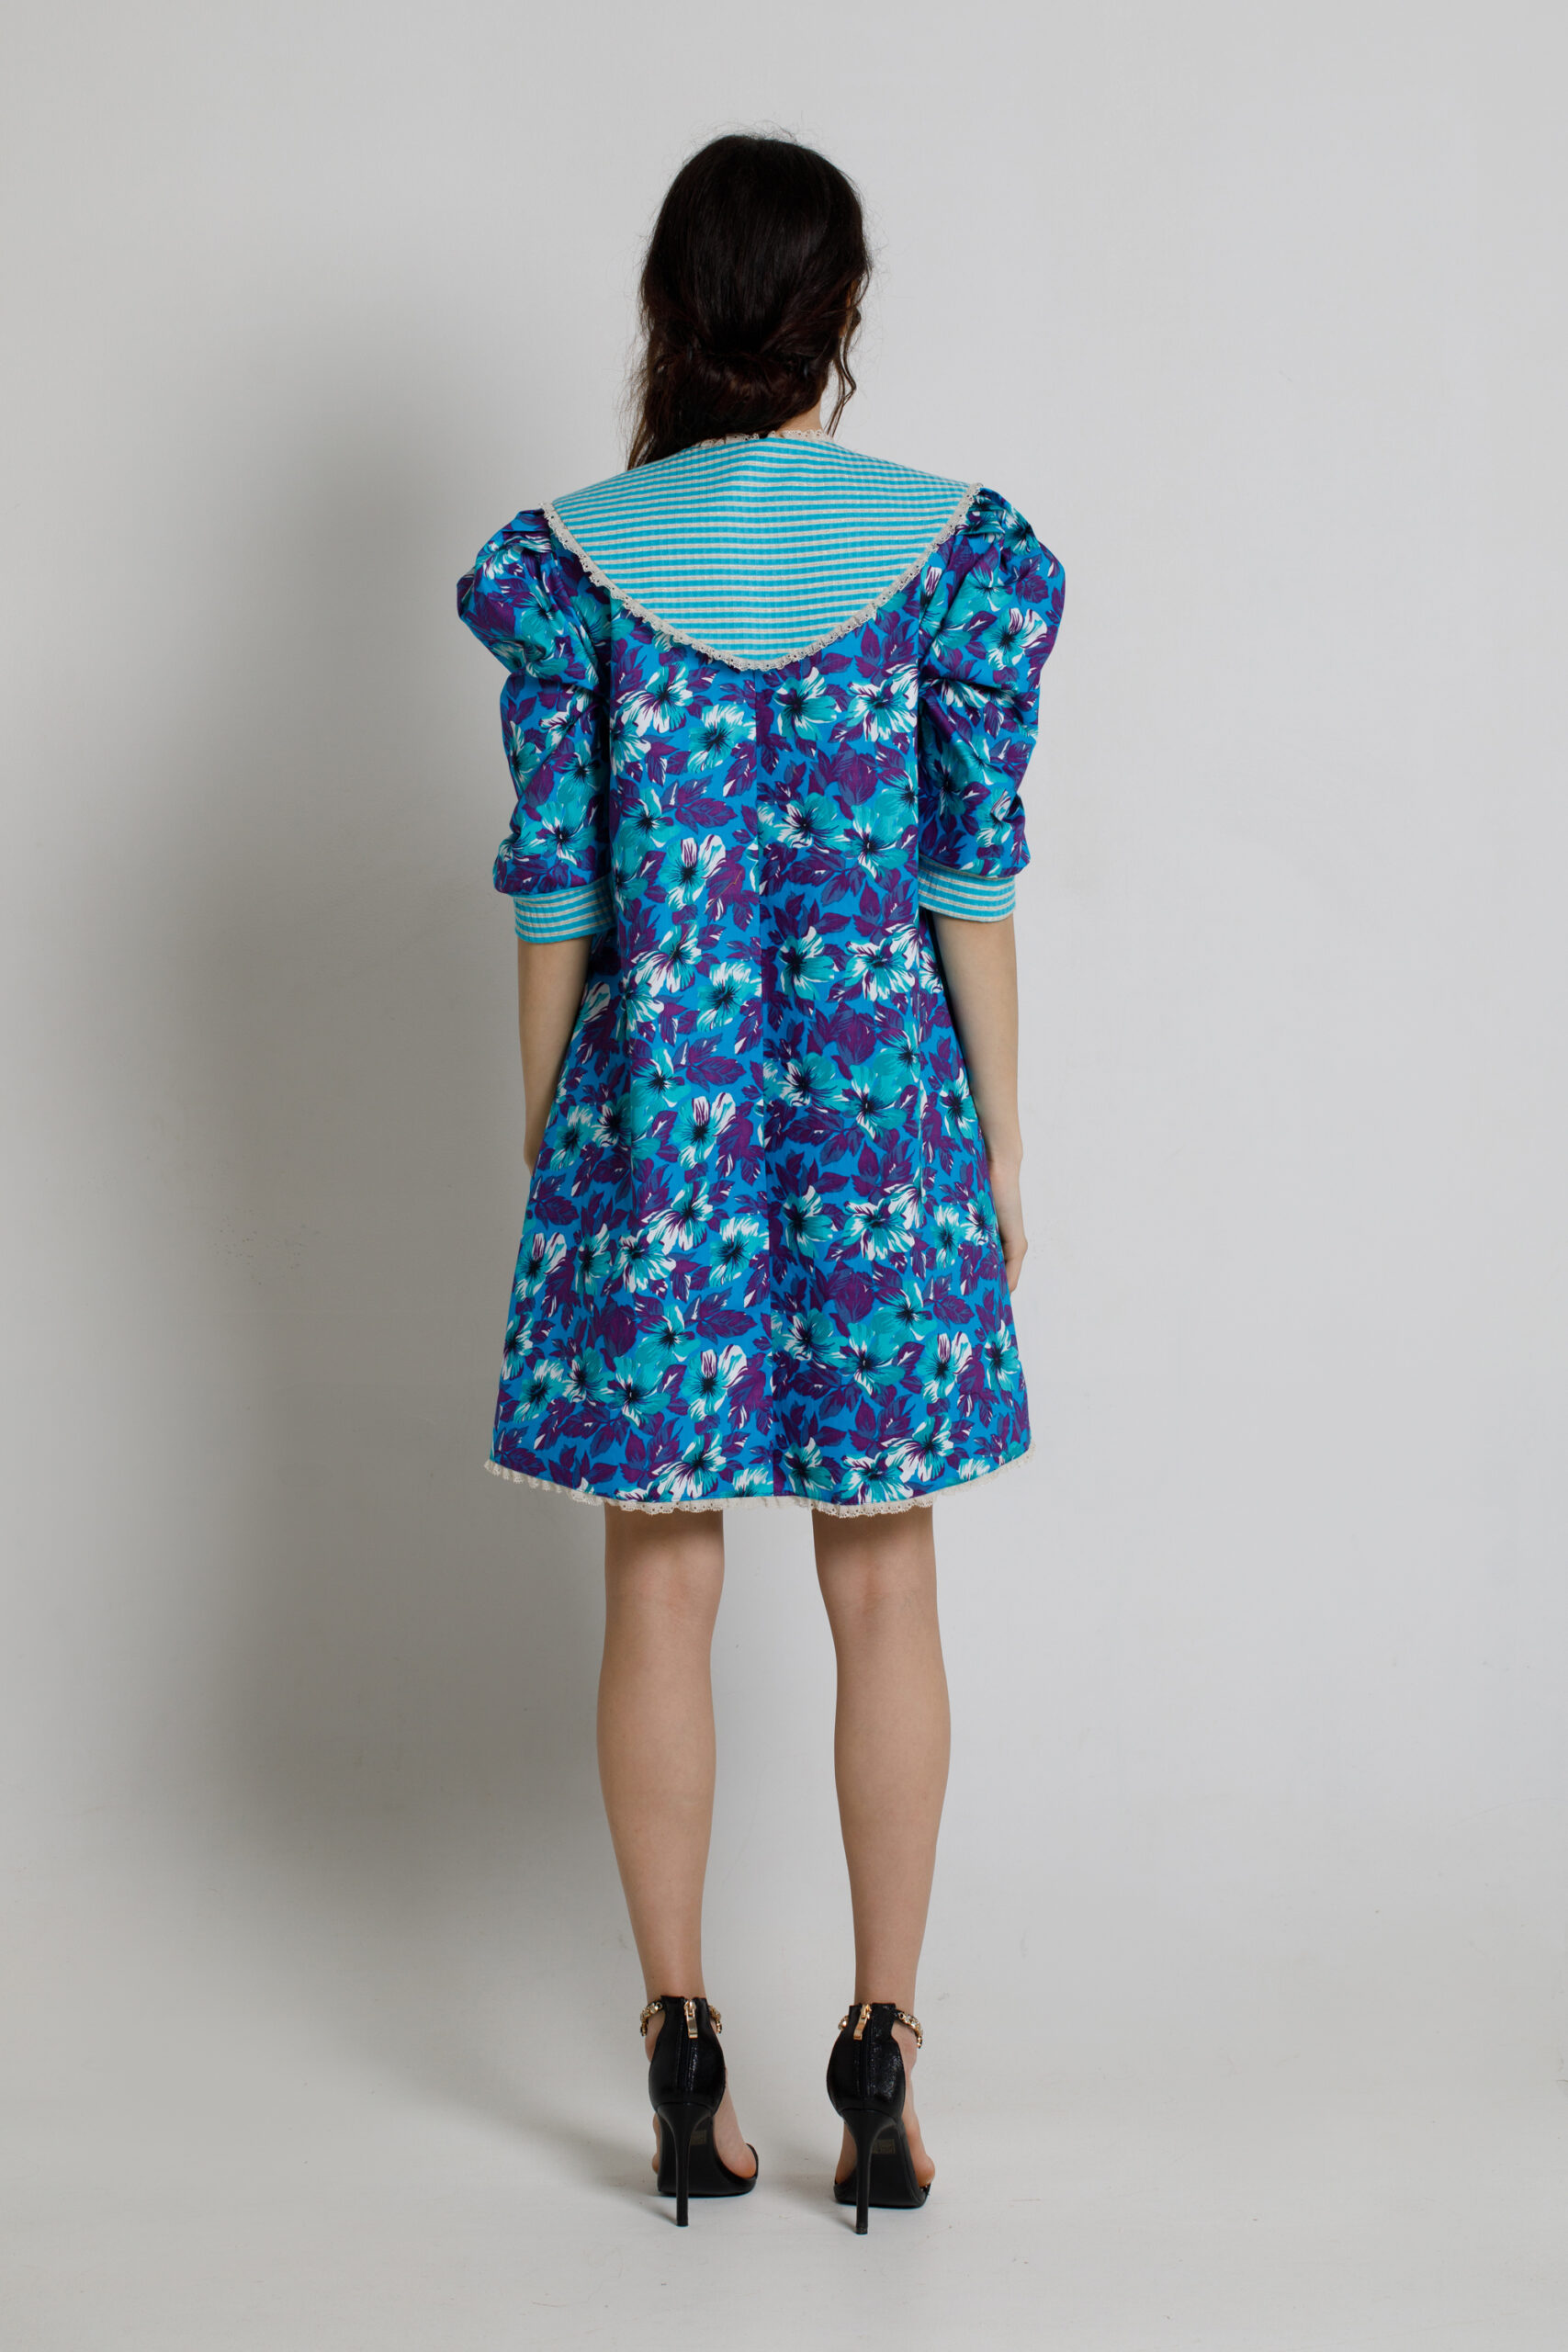 RALU Casual dress in floral poplin with detachable collar. Natural fabrics, original design, handmade embroidery